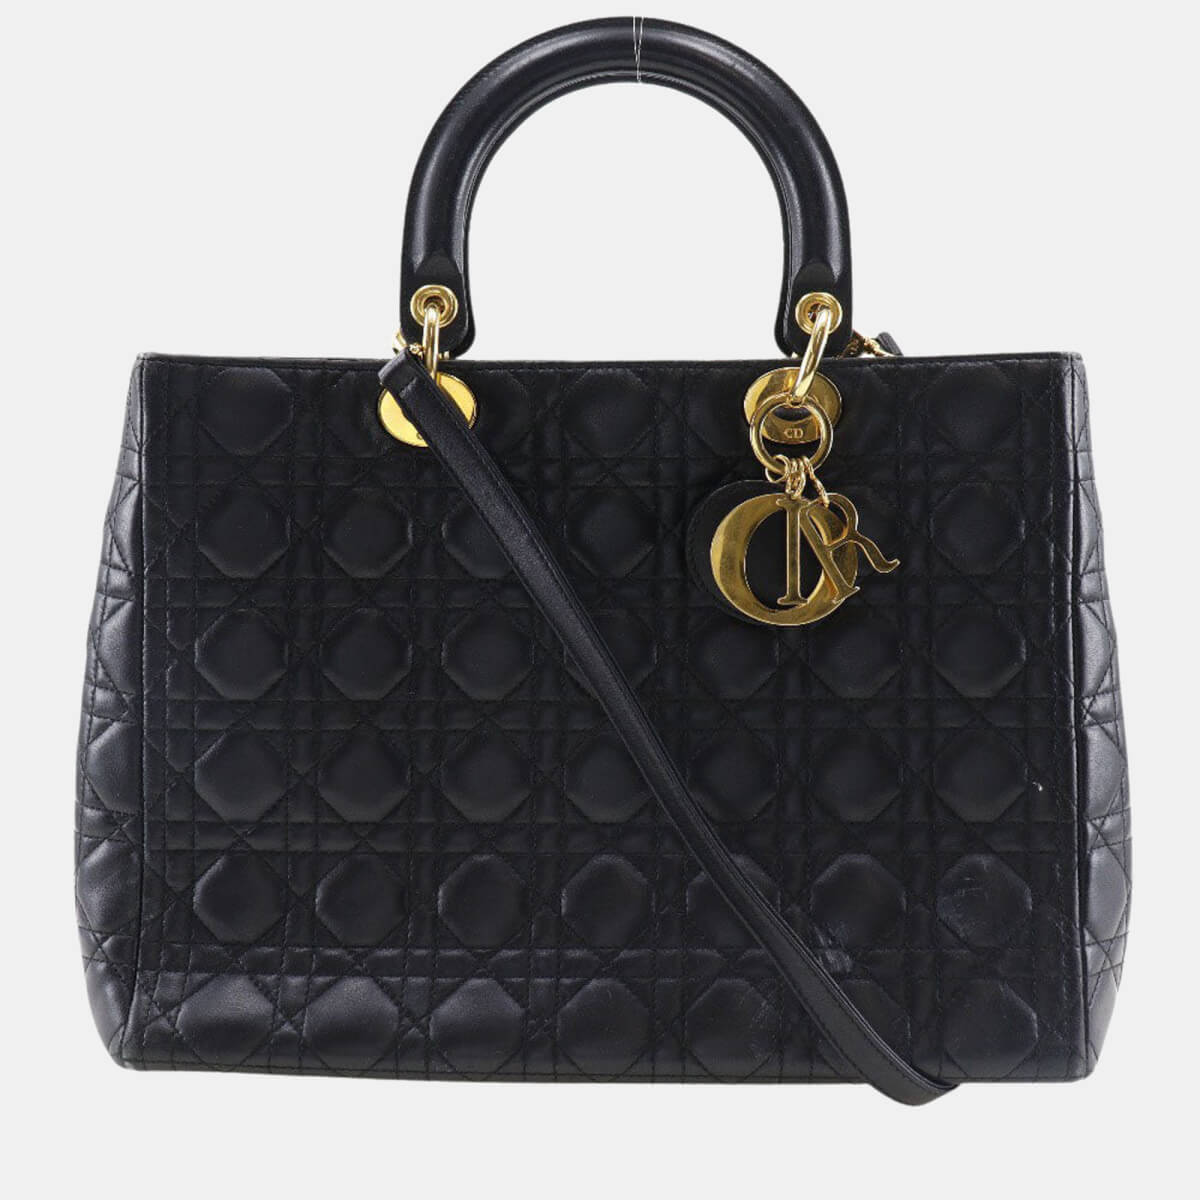 Dior Black Leather Lady Dior Top Handle Bag